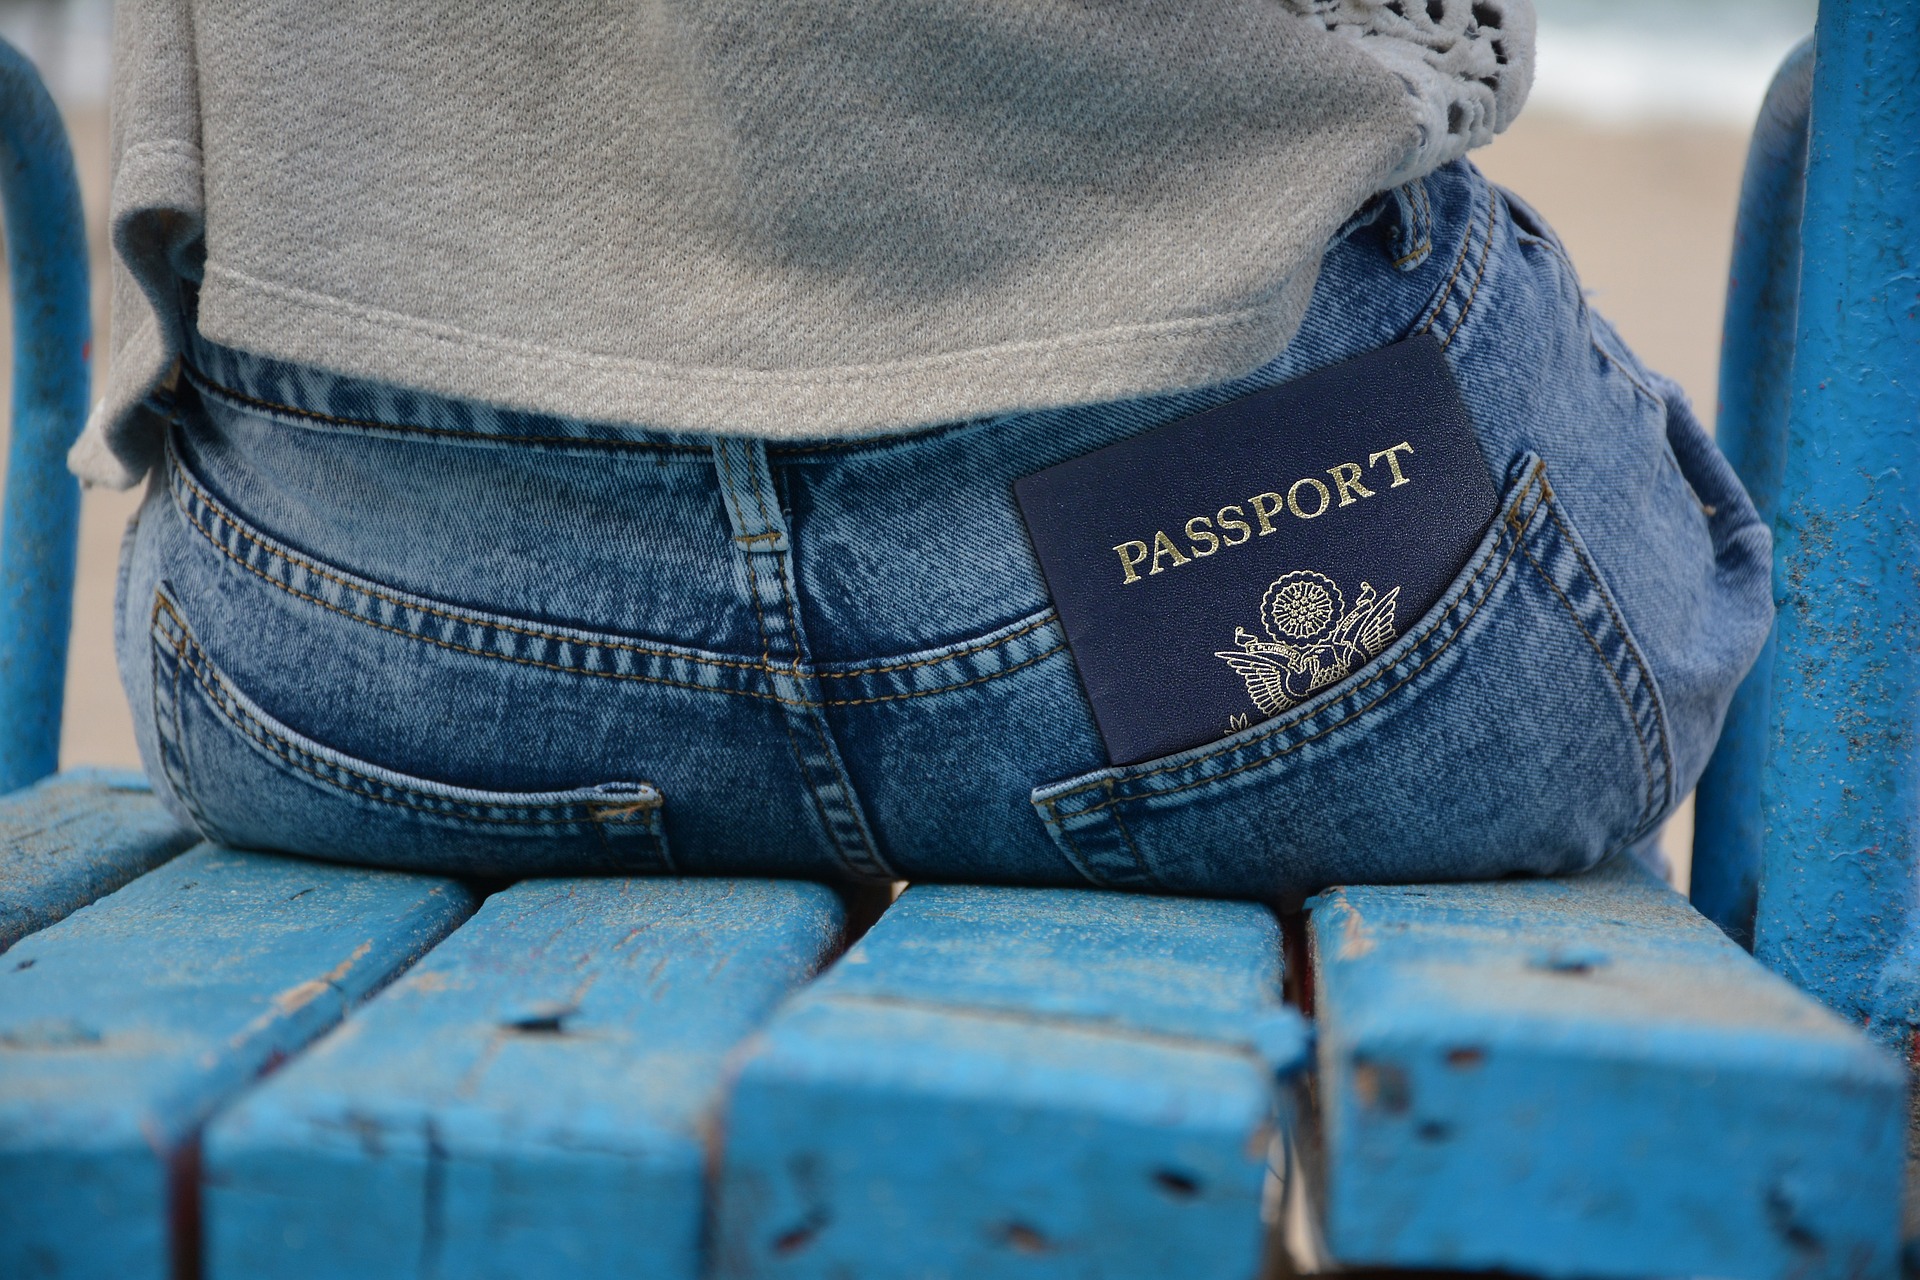 paszport passport